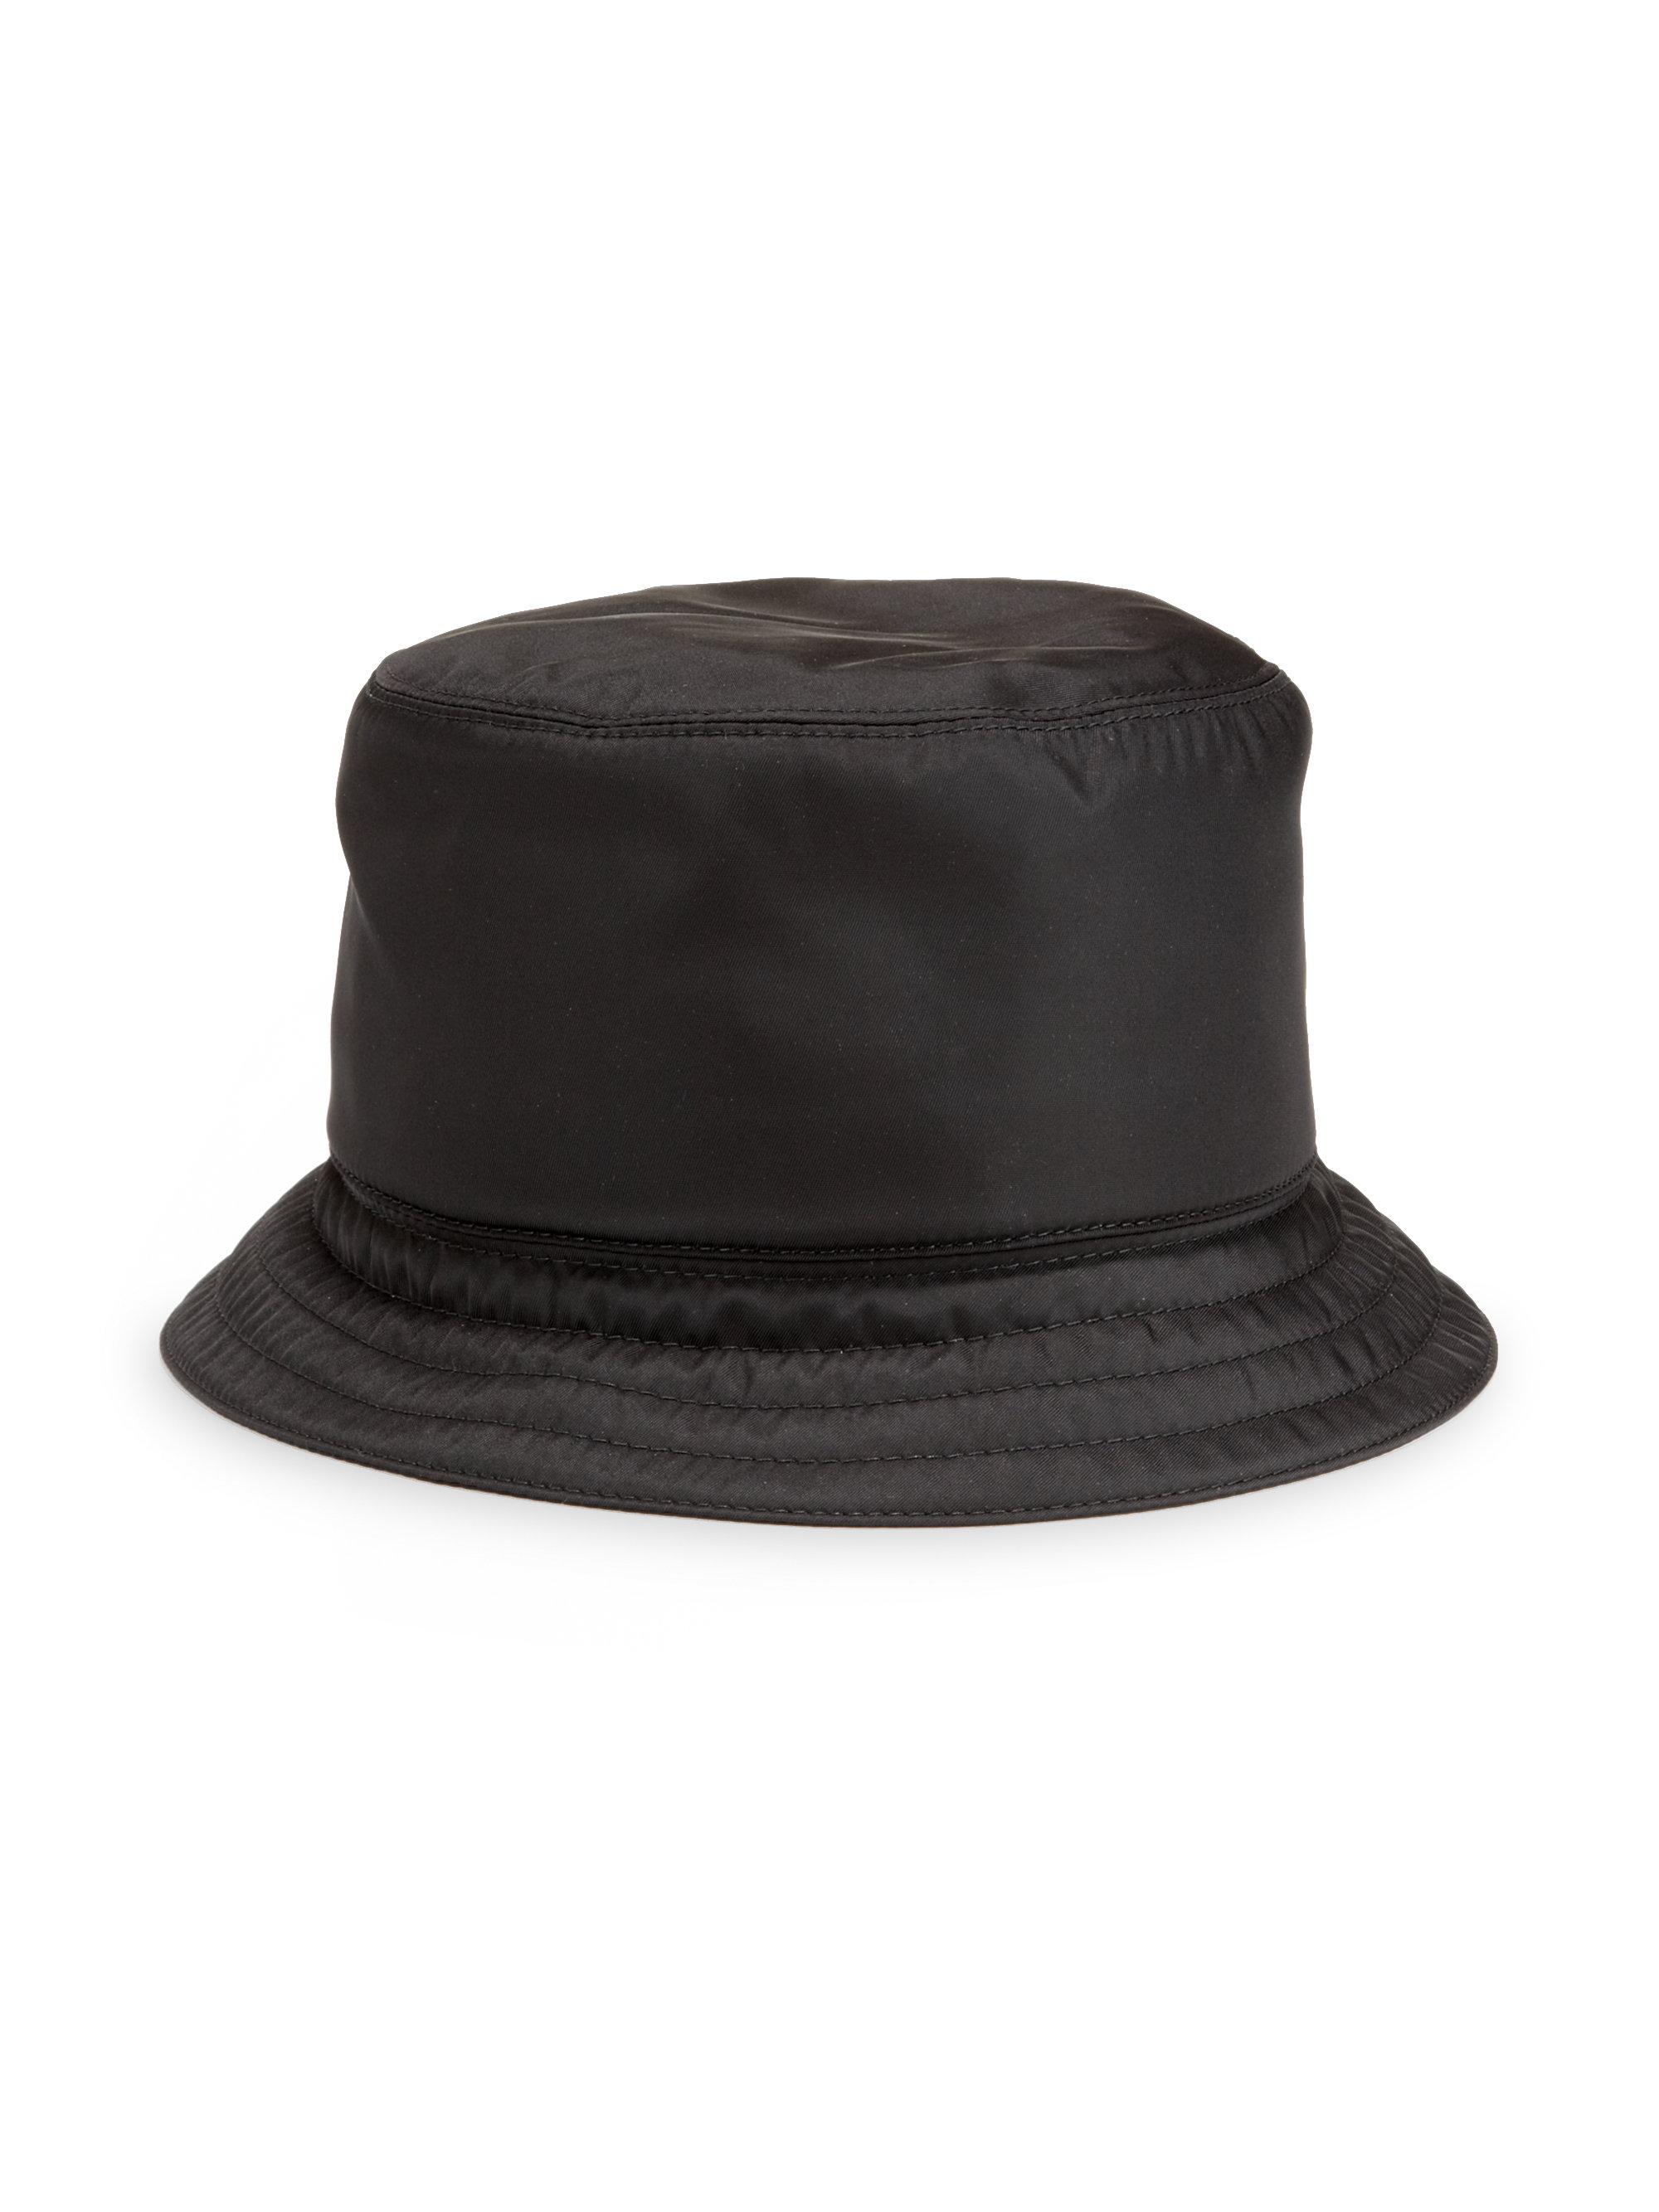 Lyst - Prada Nylon Bucket Hat in Black for Men